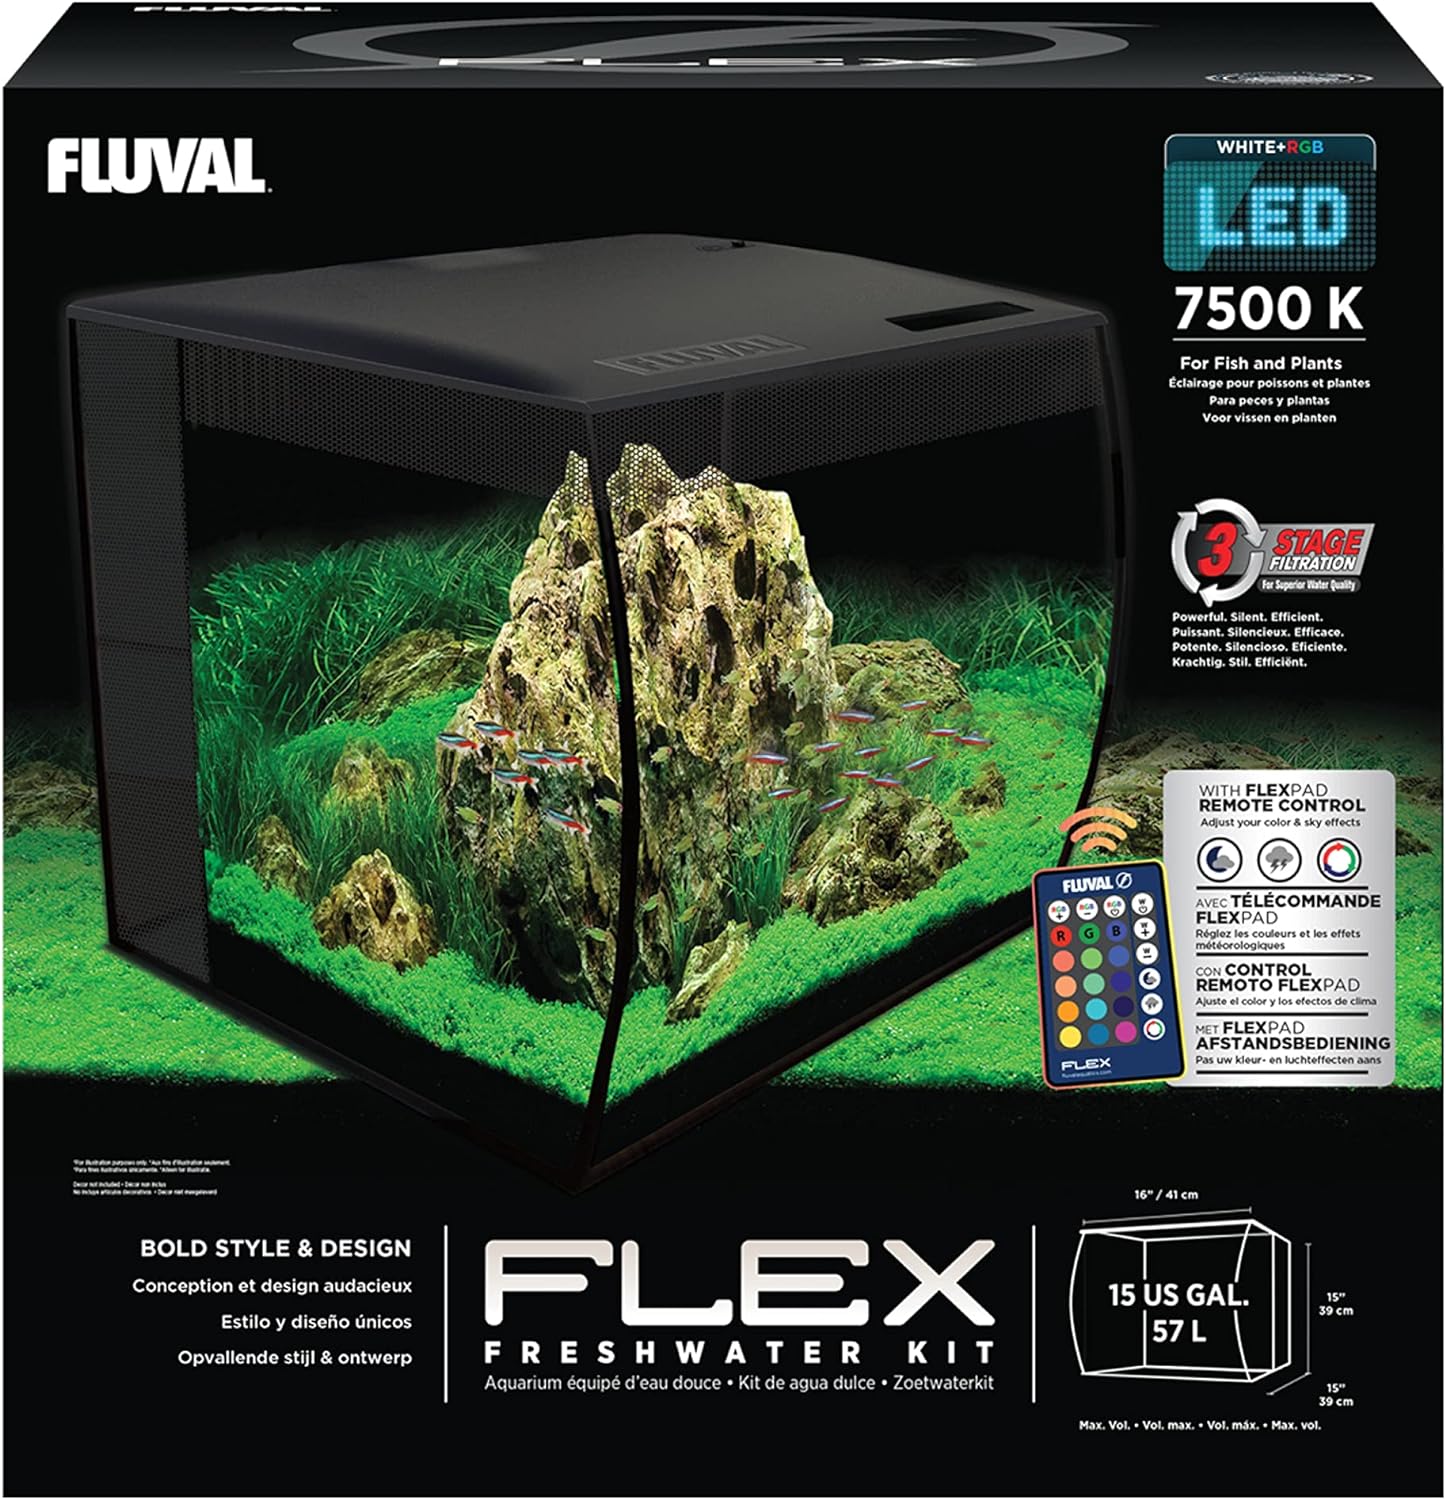 Flex 15 Aquarium Kit - Fish Tank for Fish & Plants - Comes with LED Lights, Filtration System & More - 16" X 15" X 15" - 57 L, 15 Gal. - Black